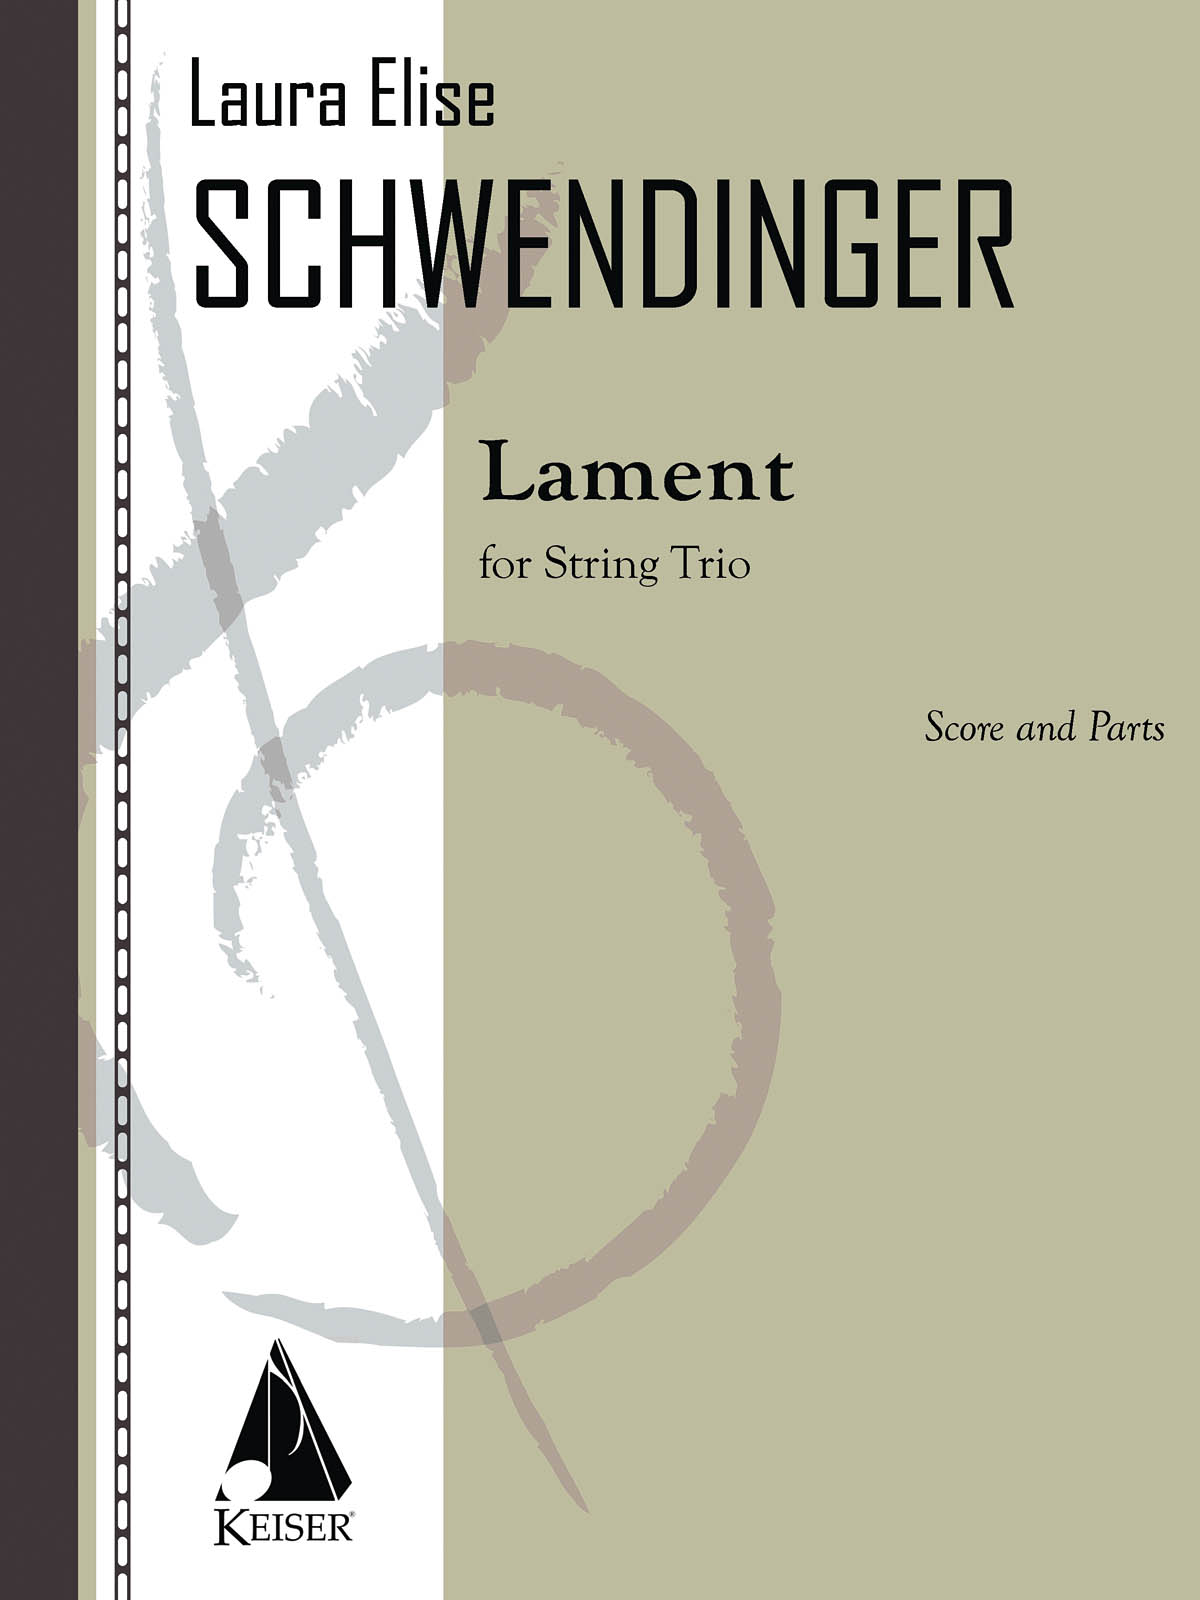 Laura Schwendinger: Lament for String Trio – Score and Parts